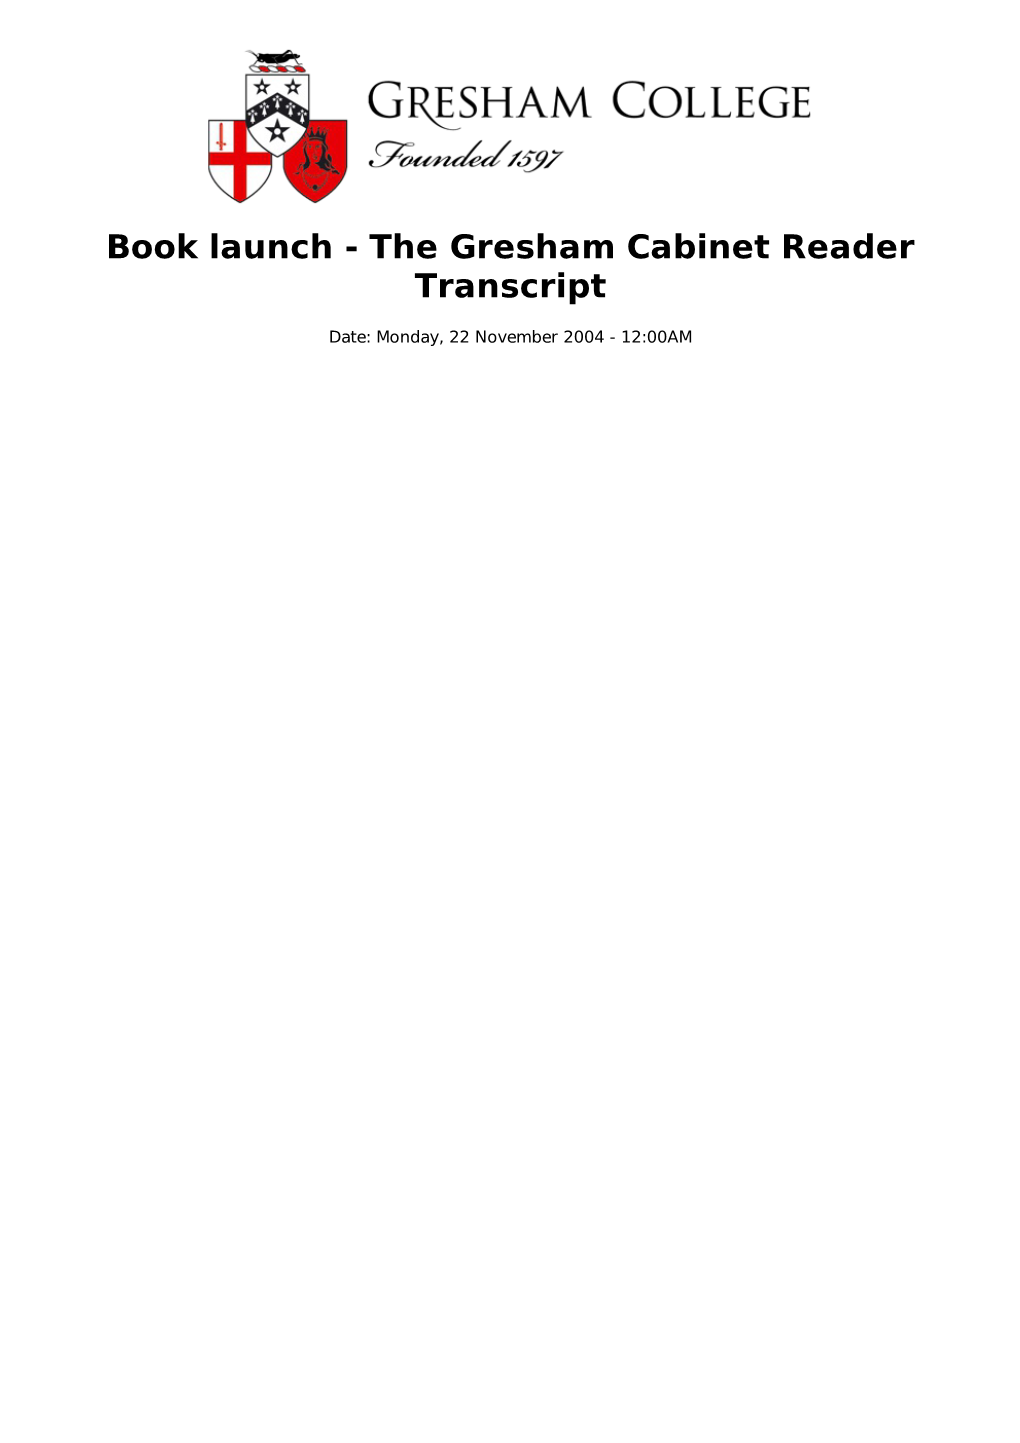 Book Launch - the Gresham Cabinet Reader Transcript